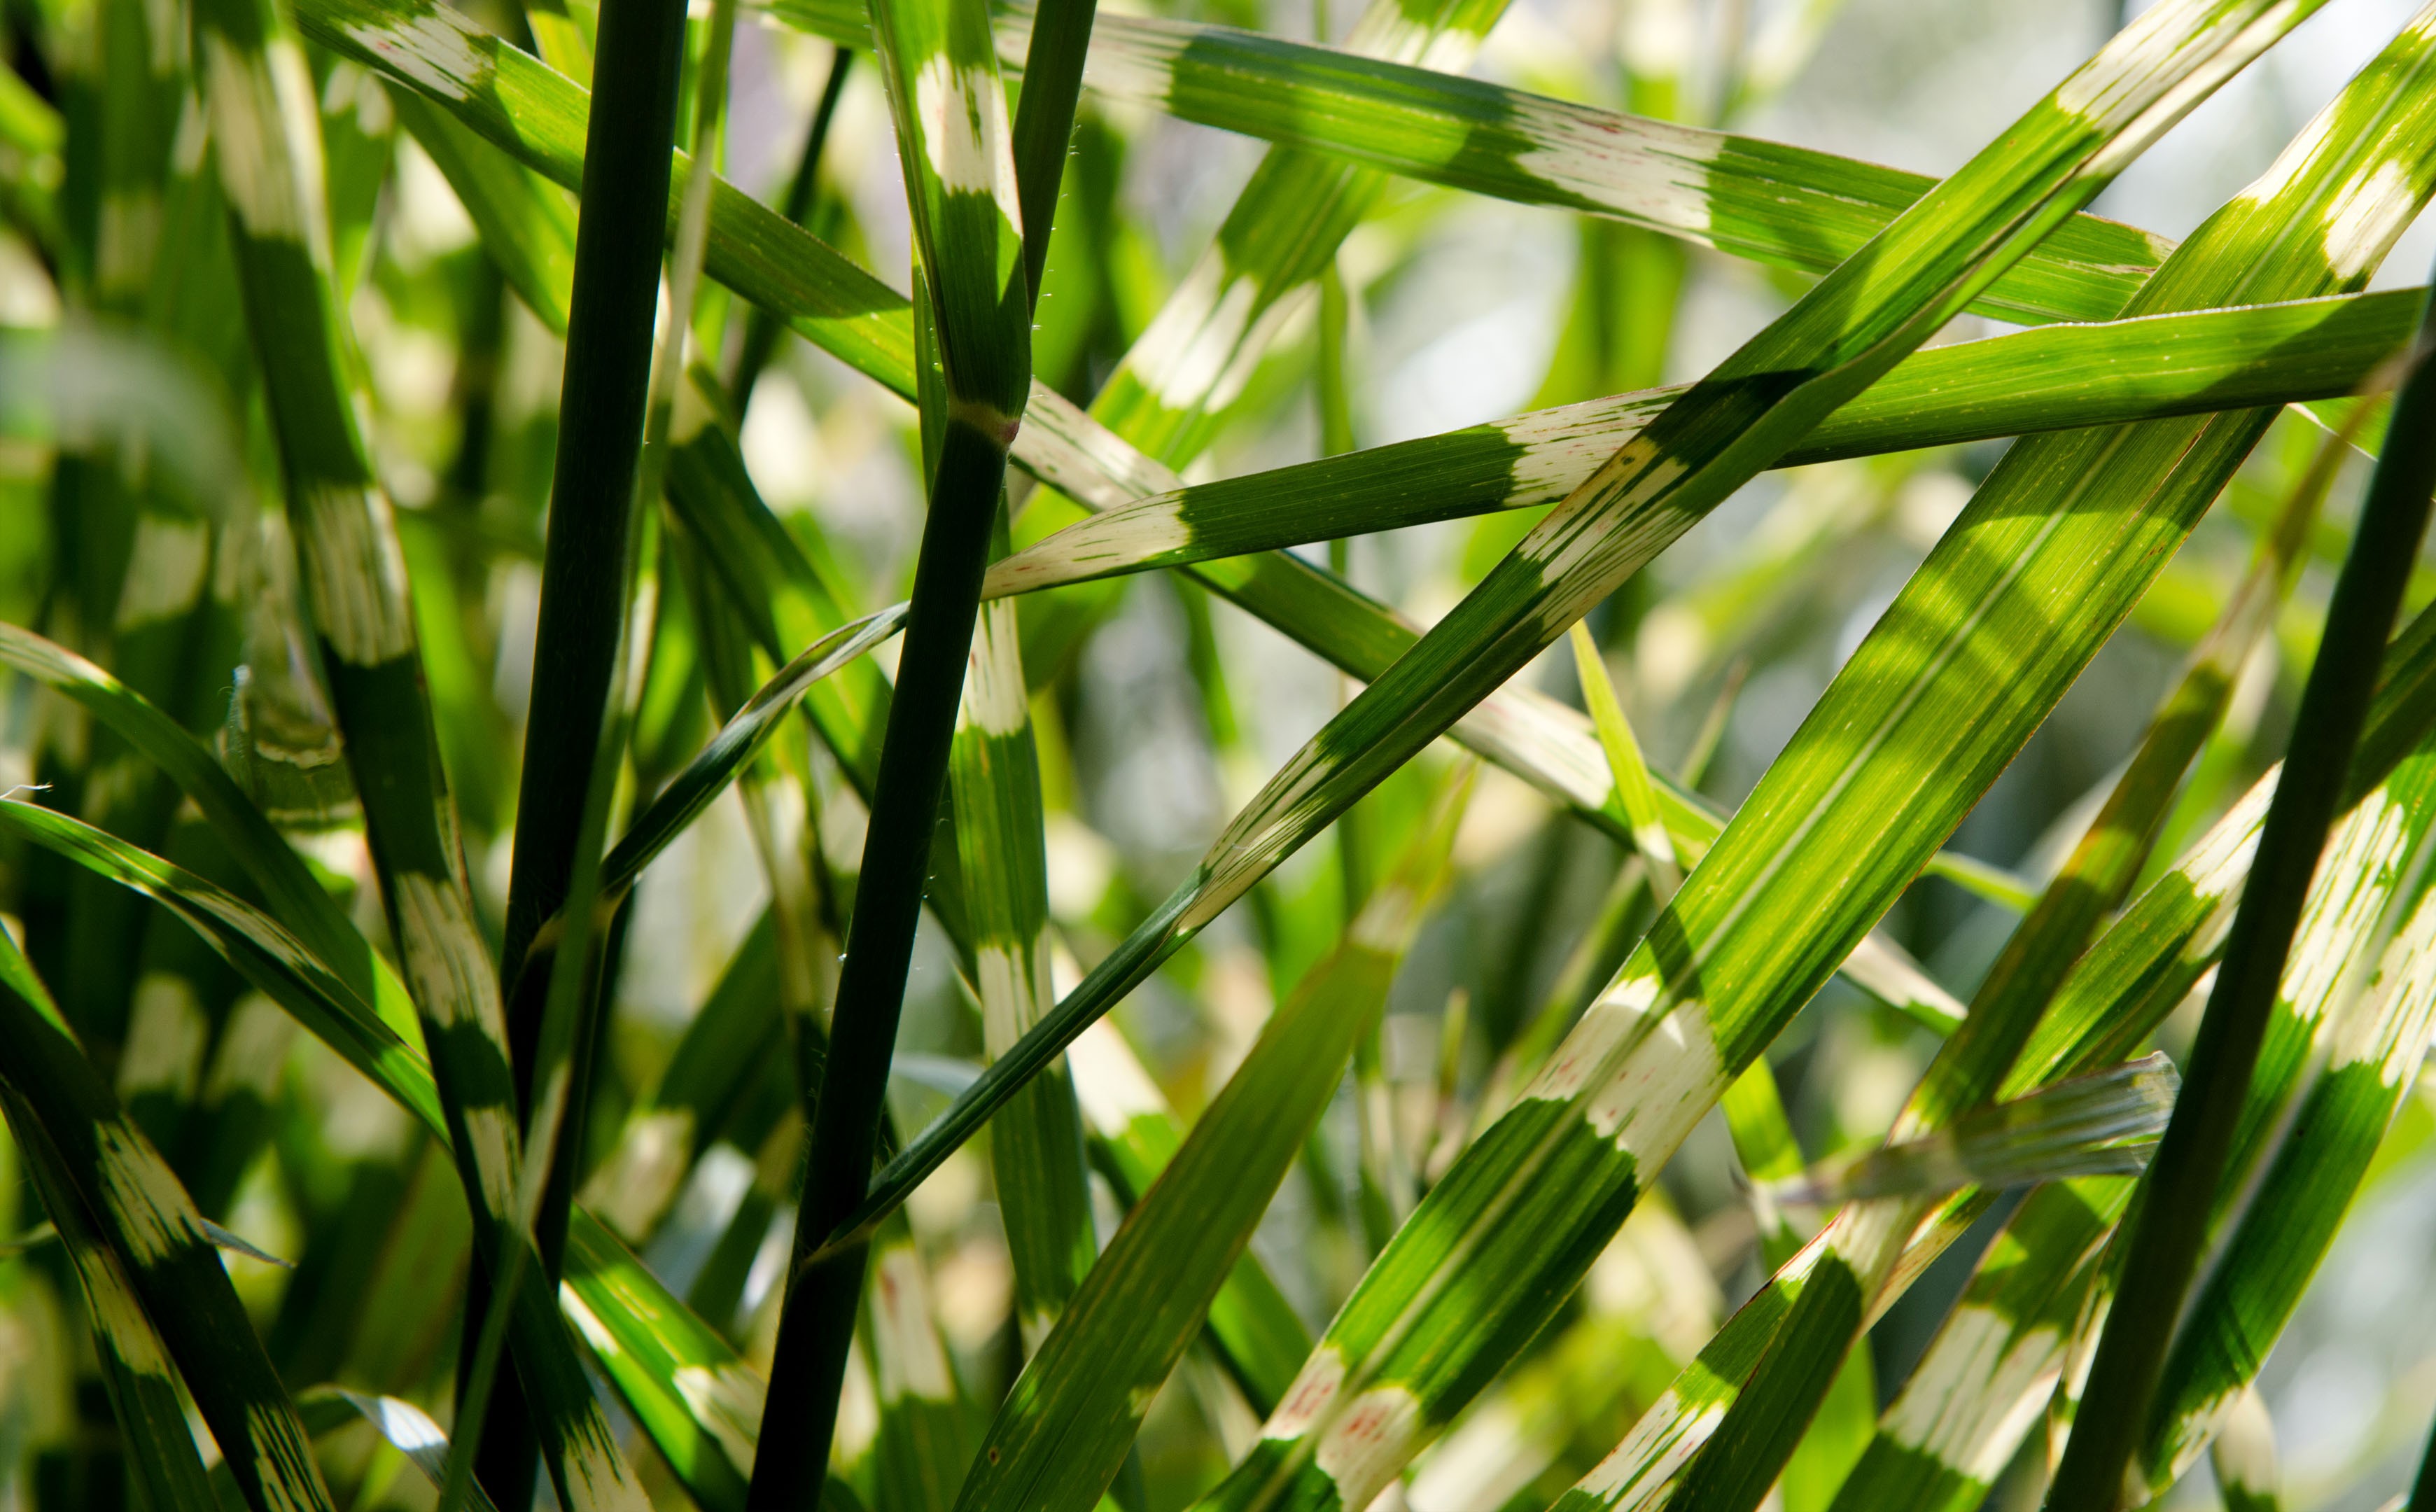 General 3480x2160 nature plants grass leaves reeds green macro dappled sunlight